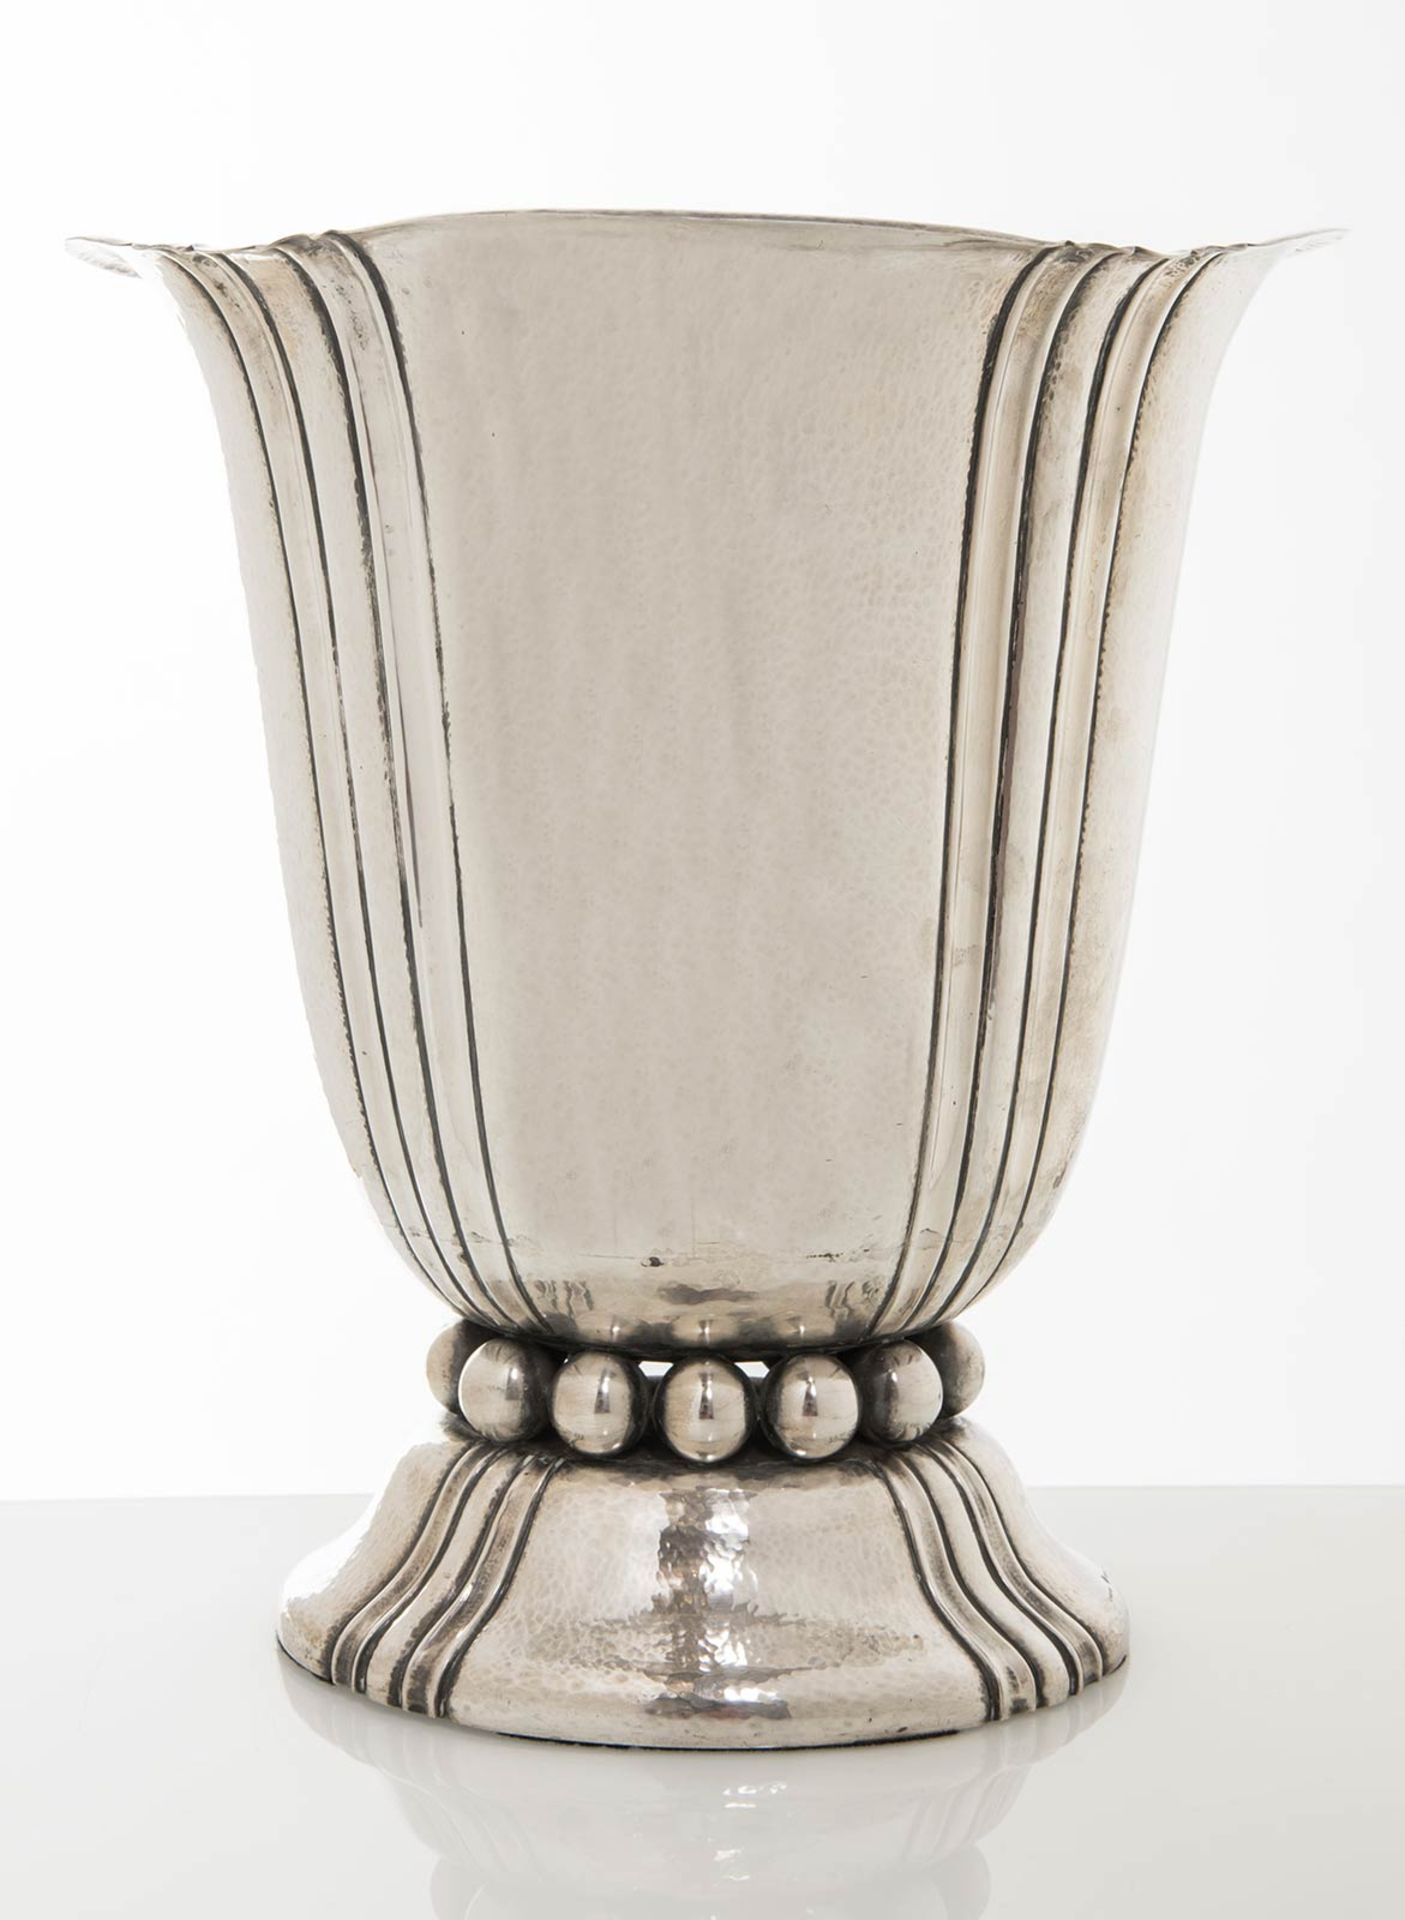 Genazzi Argentiere, Grande vaso in argento martellato, 1930 - Art Deco.